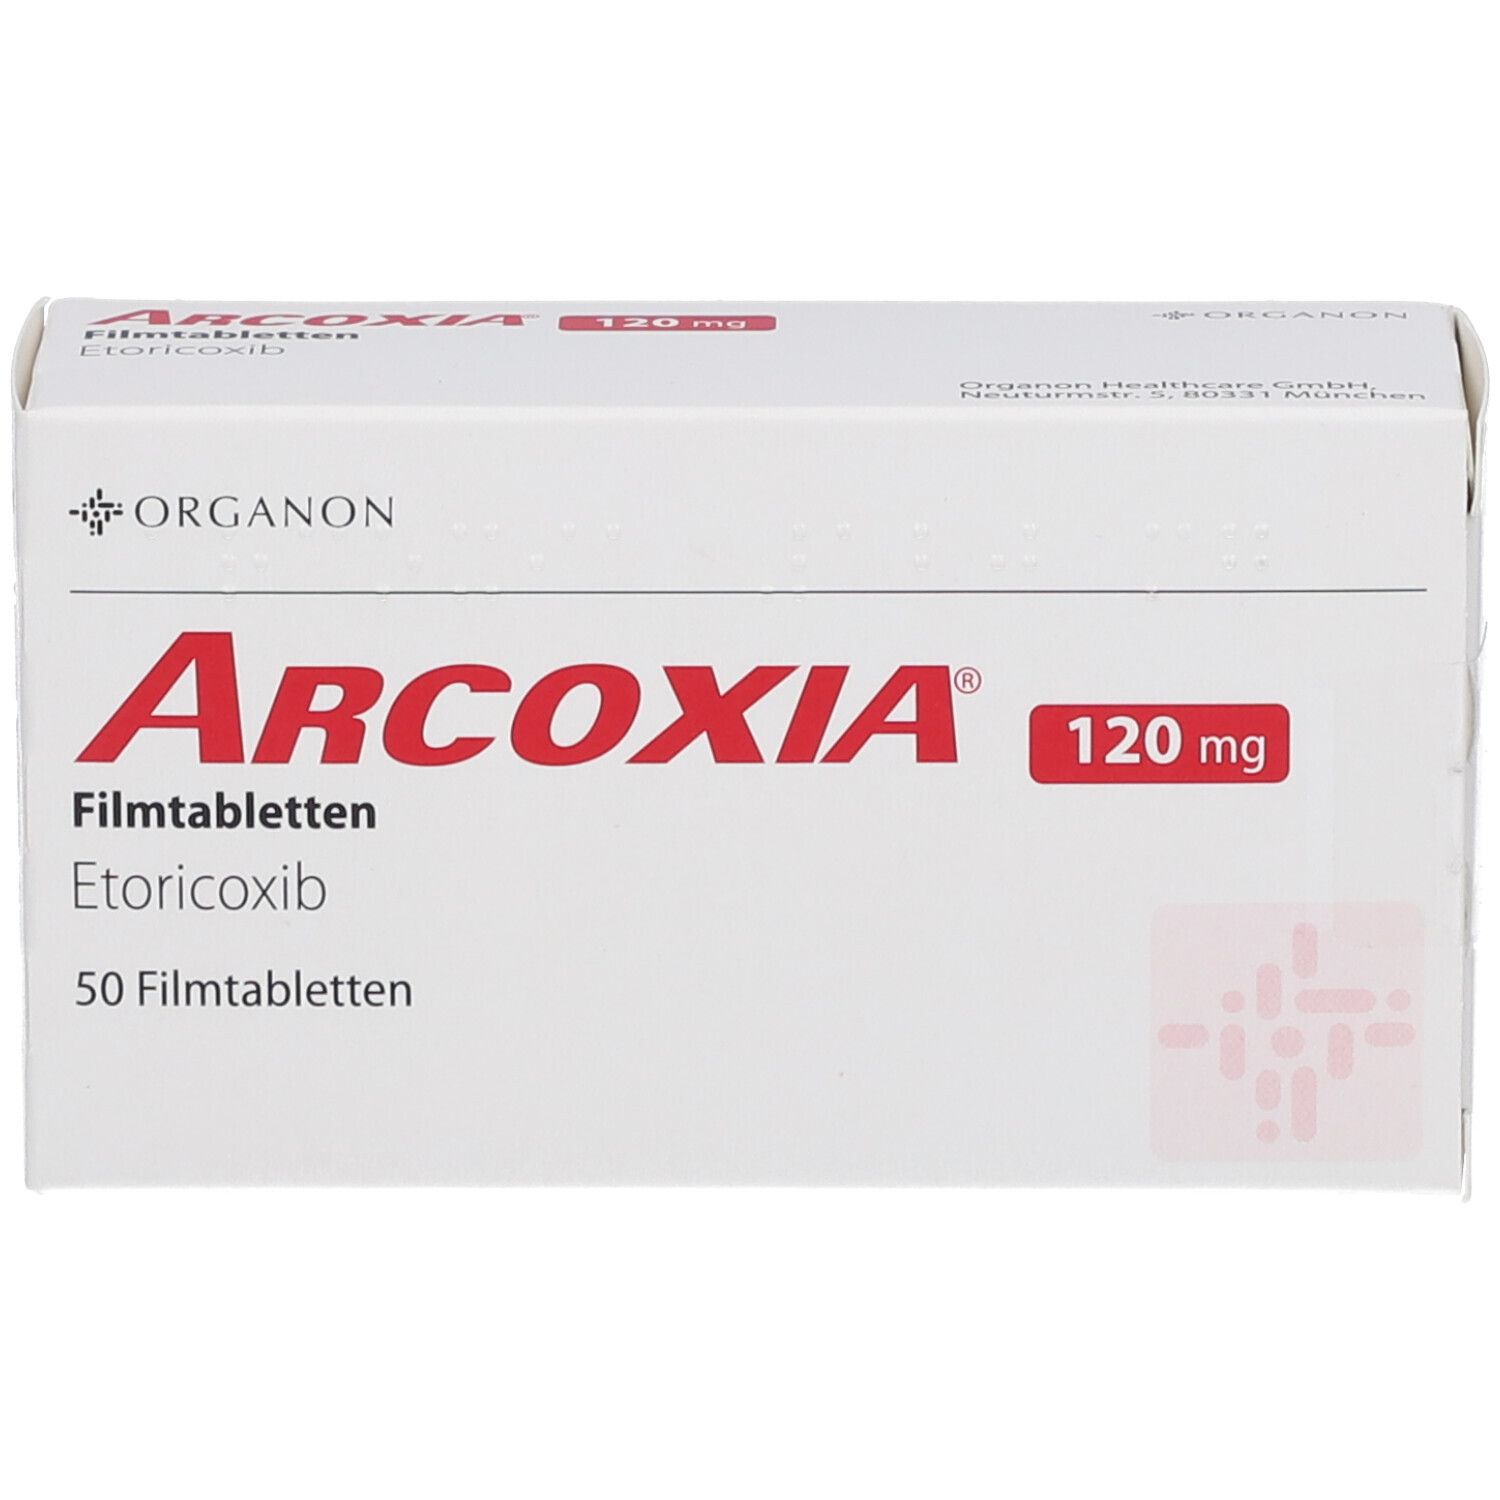 ARCOXIA® 120 mg